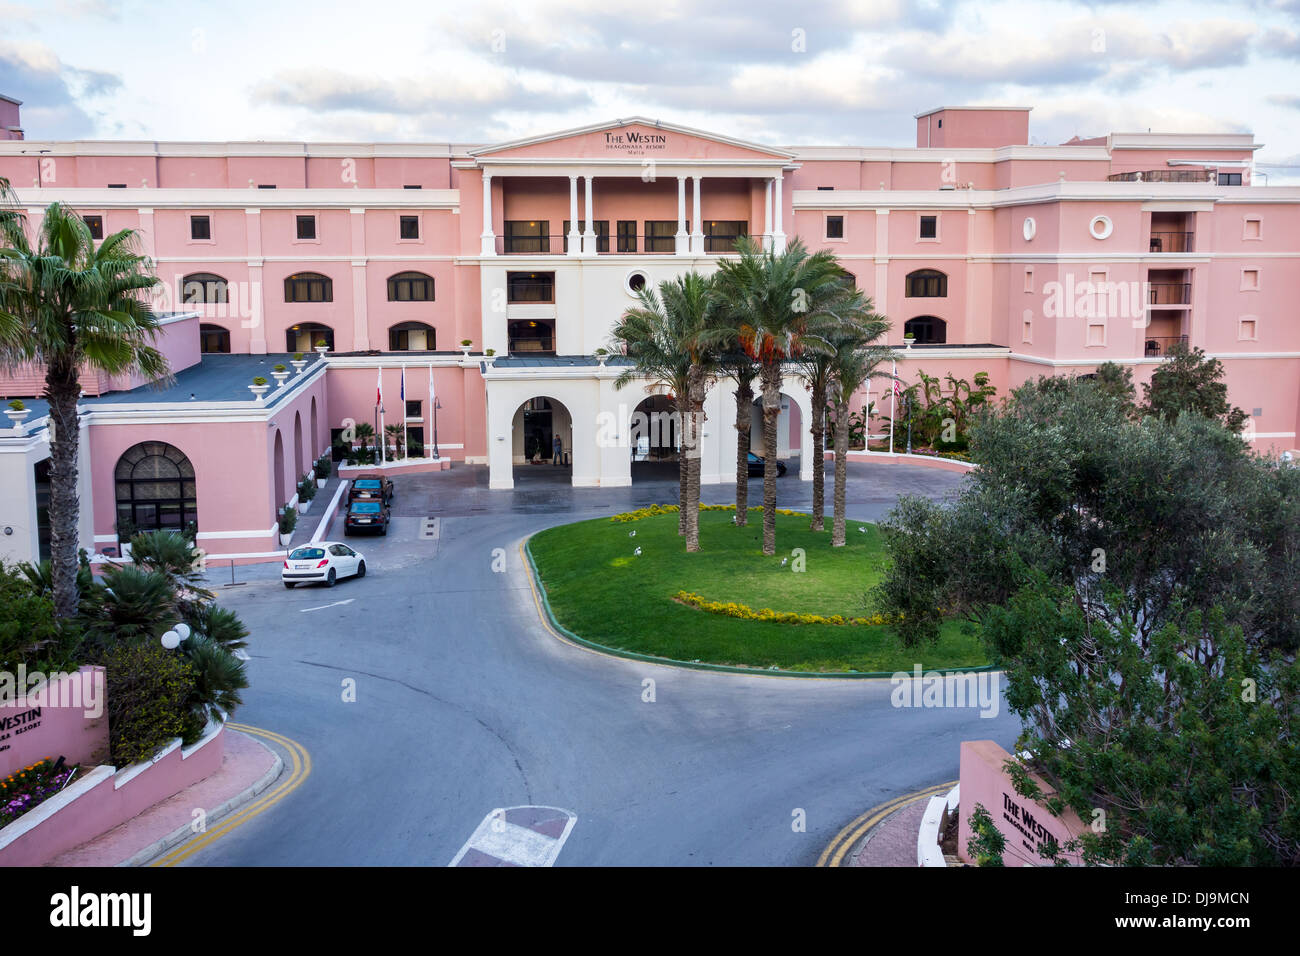 The Westin Hotel and Resort Dragonara Island of Malta Mediterranean Sea Europe Main entrance, lobby and drop off point Stock Photo